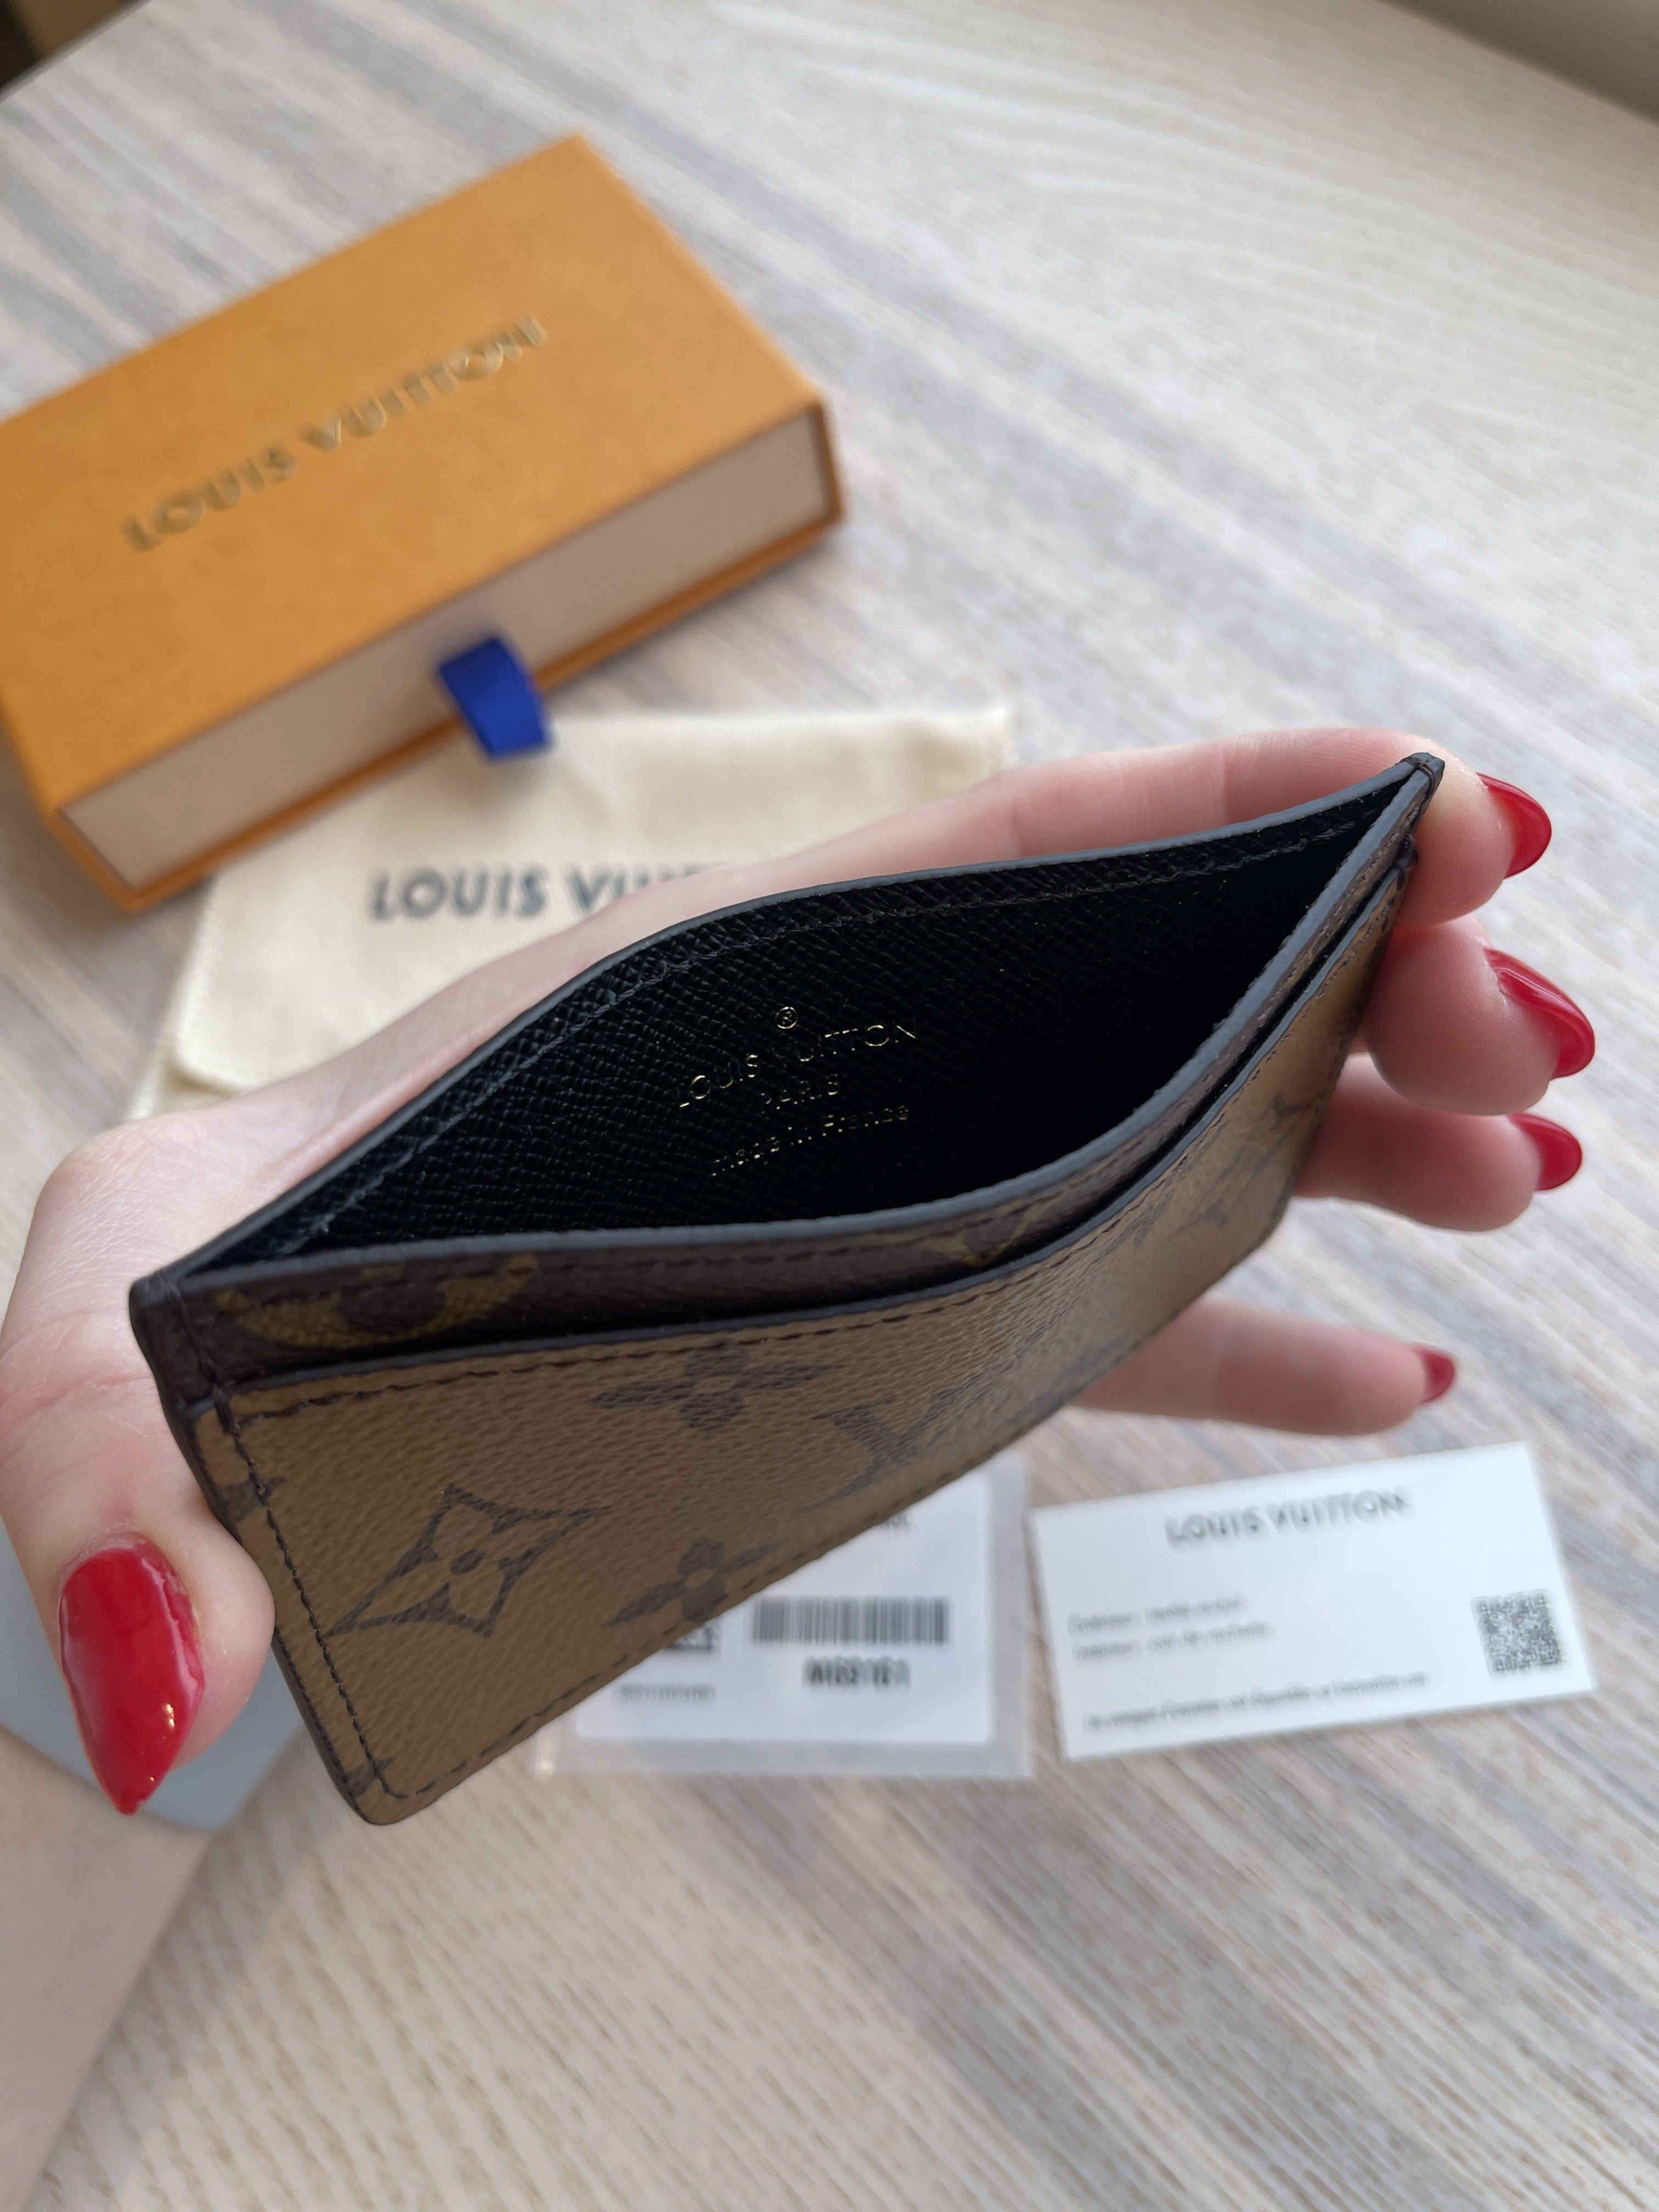 Neo Card Holder In Stock! : r/Louisvuitton